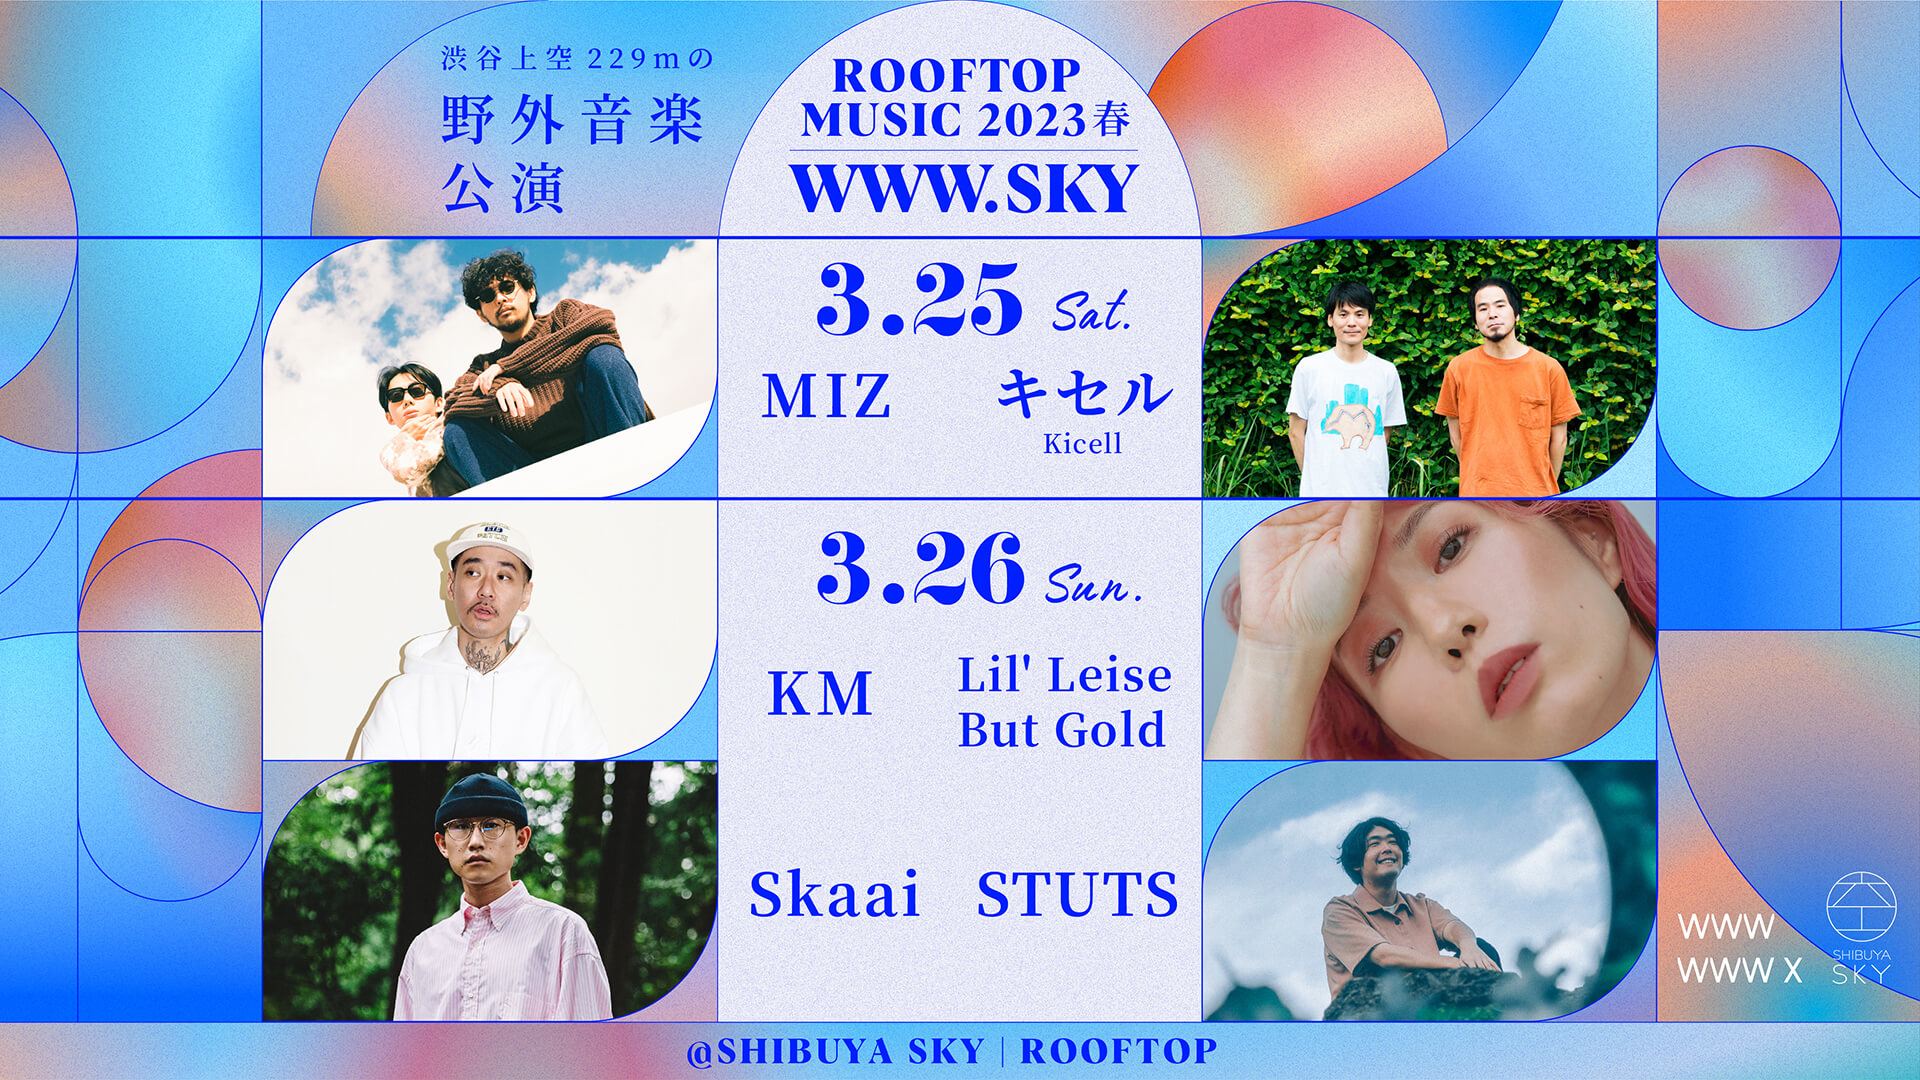 ROOFTOP MUSIC 2023春 WWW.SKY